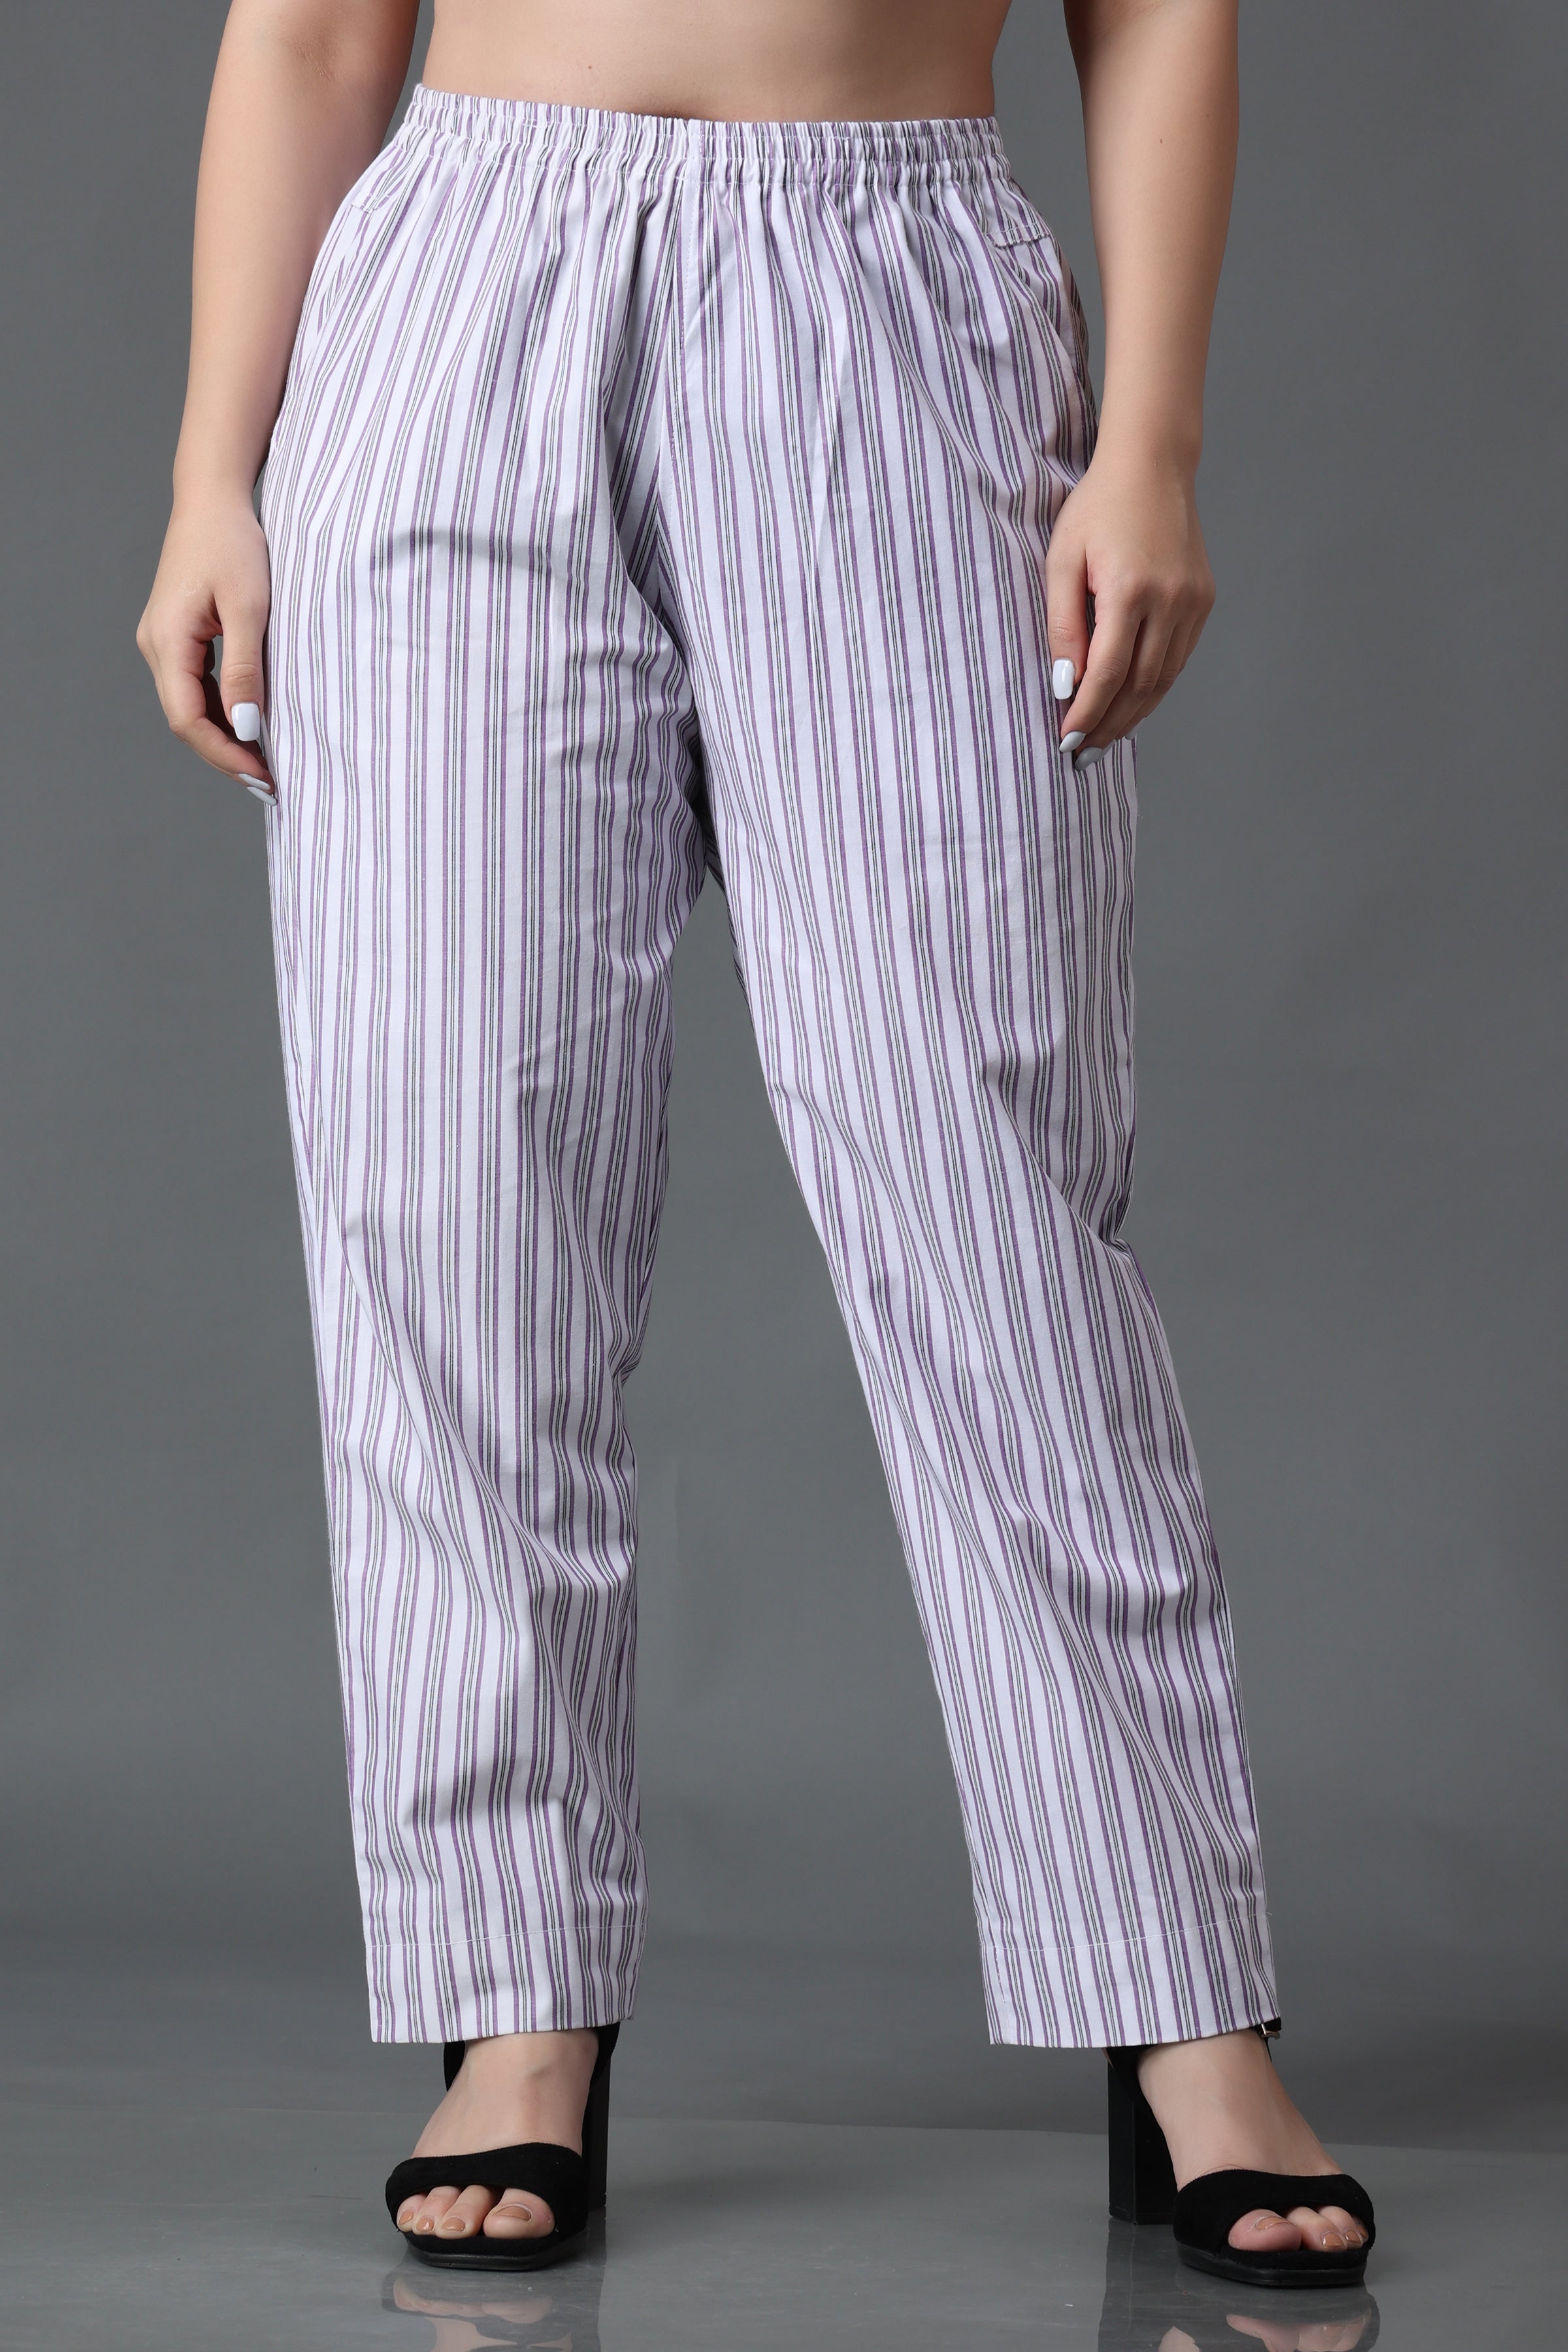 Buy Plus Size Cotton Pant Palazzo  Plus Size Striped Pant Palazzo  Apella